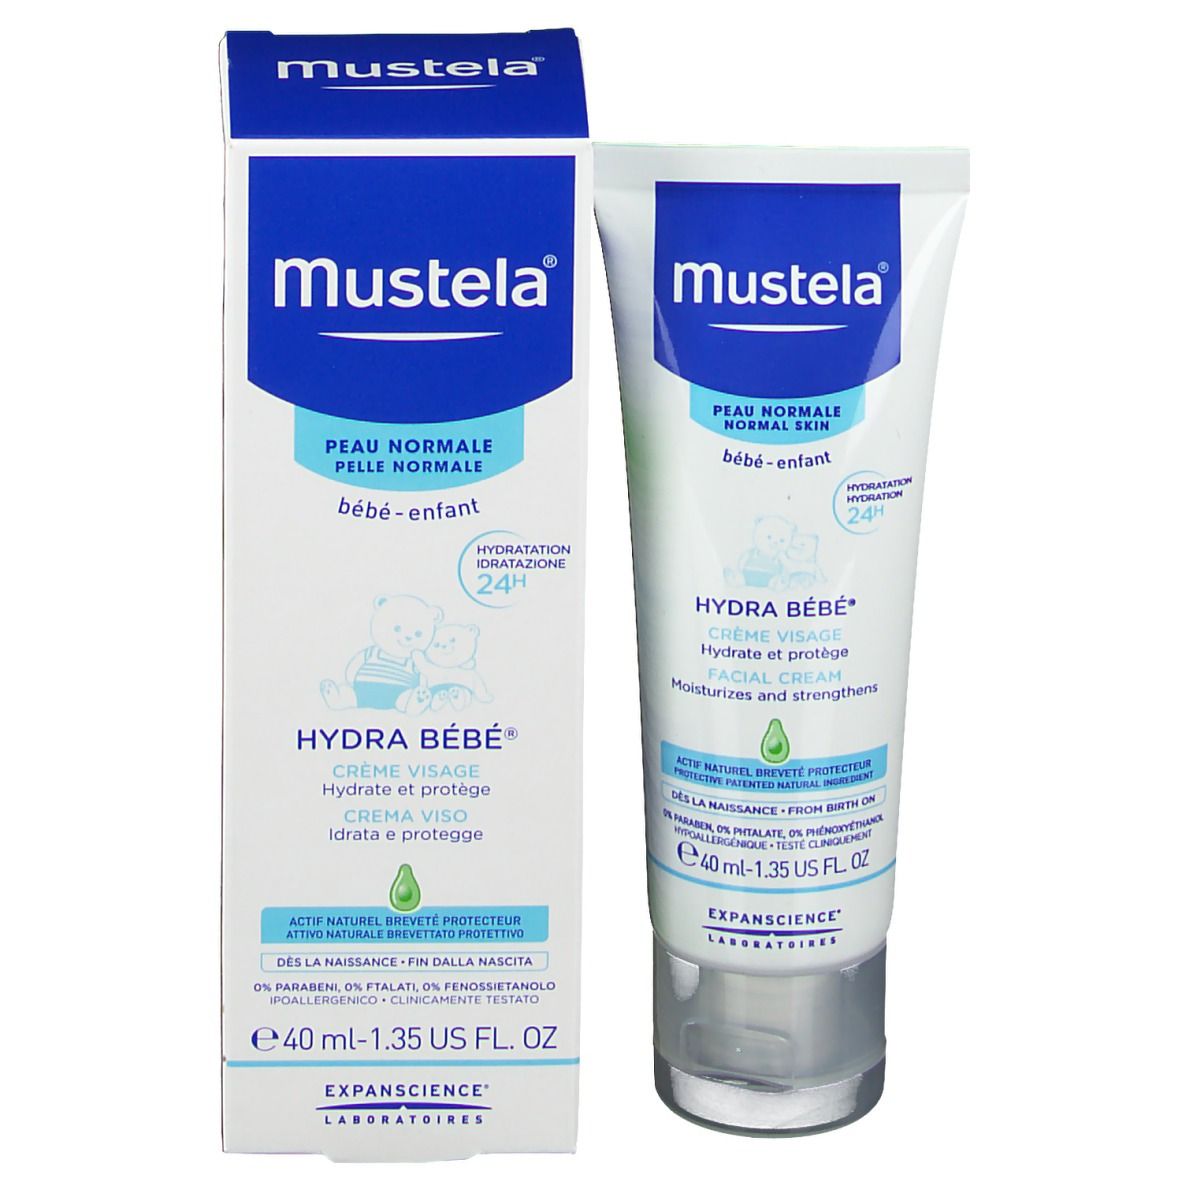 Mustela® Hydra Bébé Crema Viso